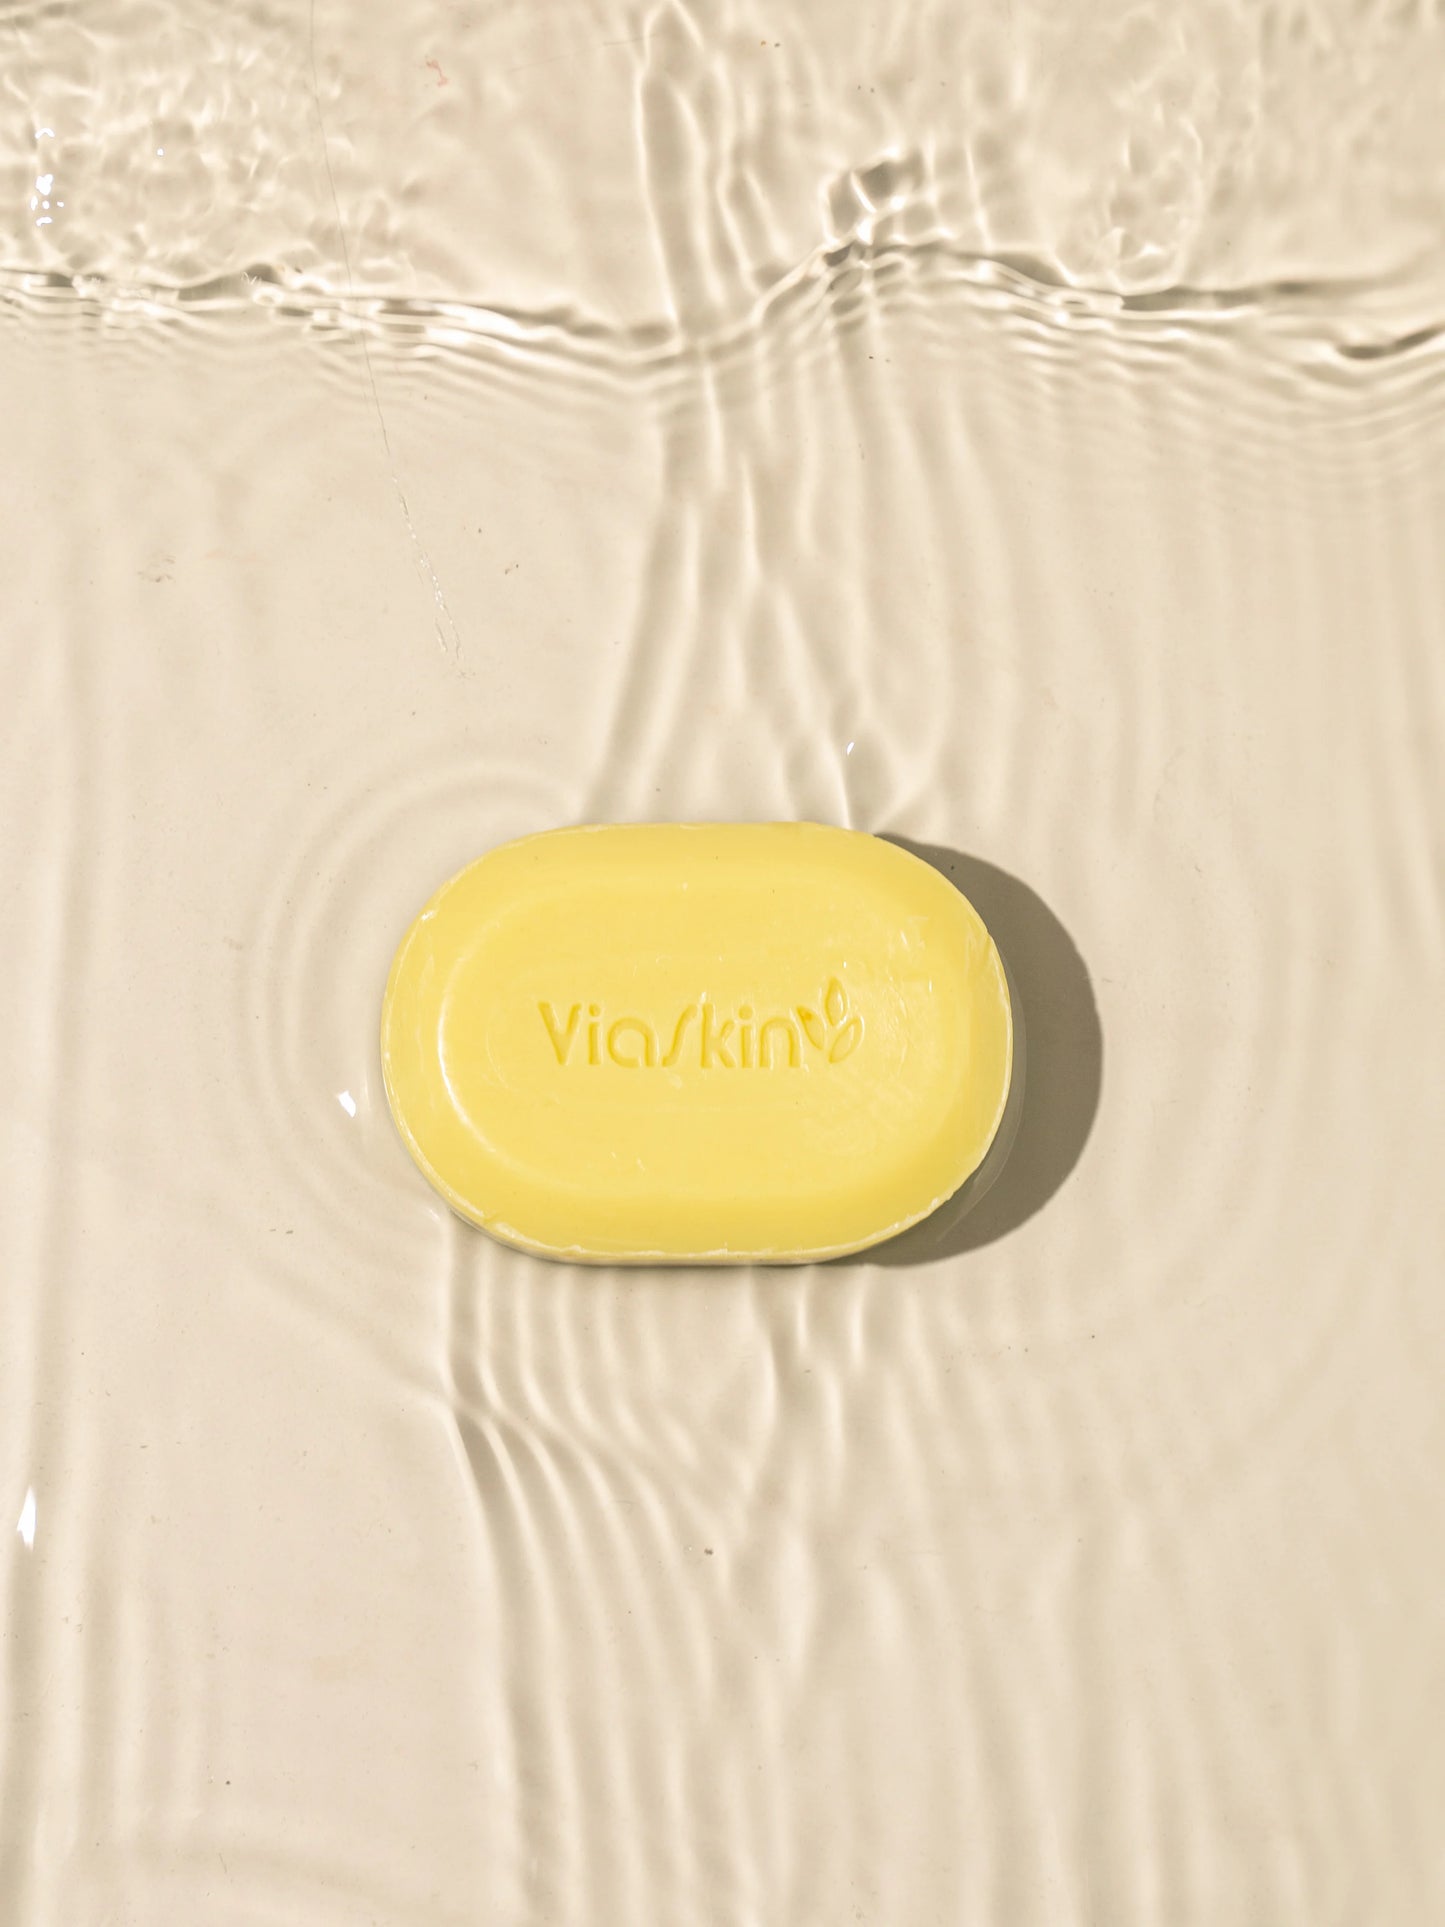 Viaskin Natural Hygiene Soap, ( Pack of 4 ), 75 g / Soap